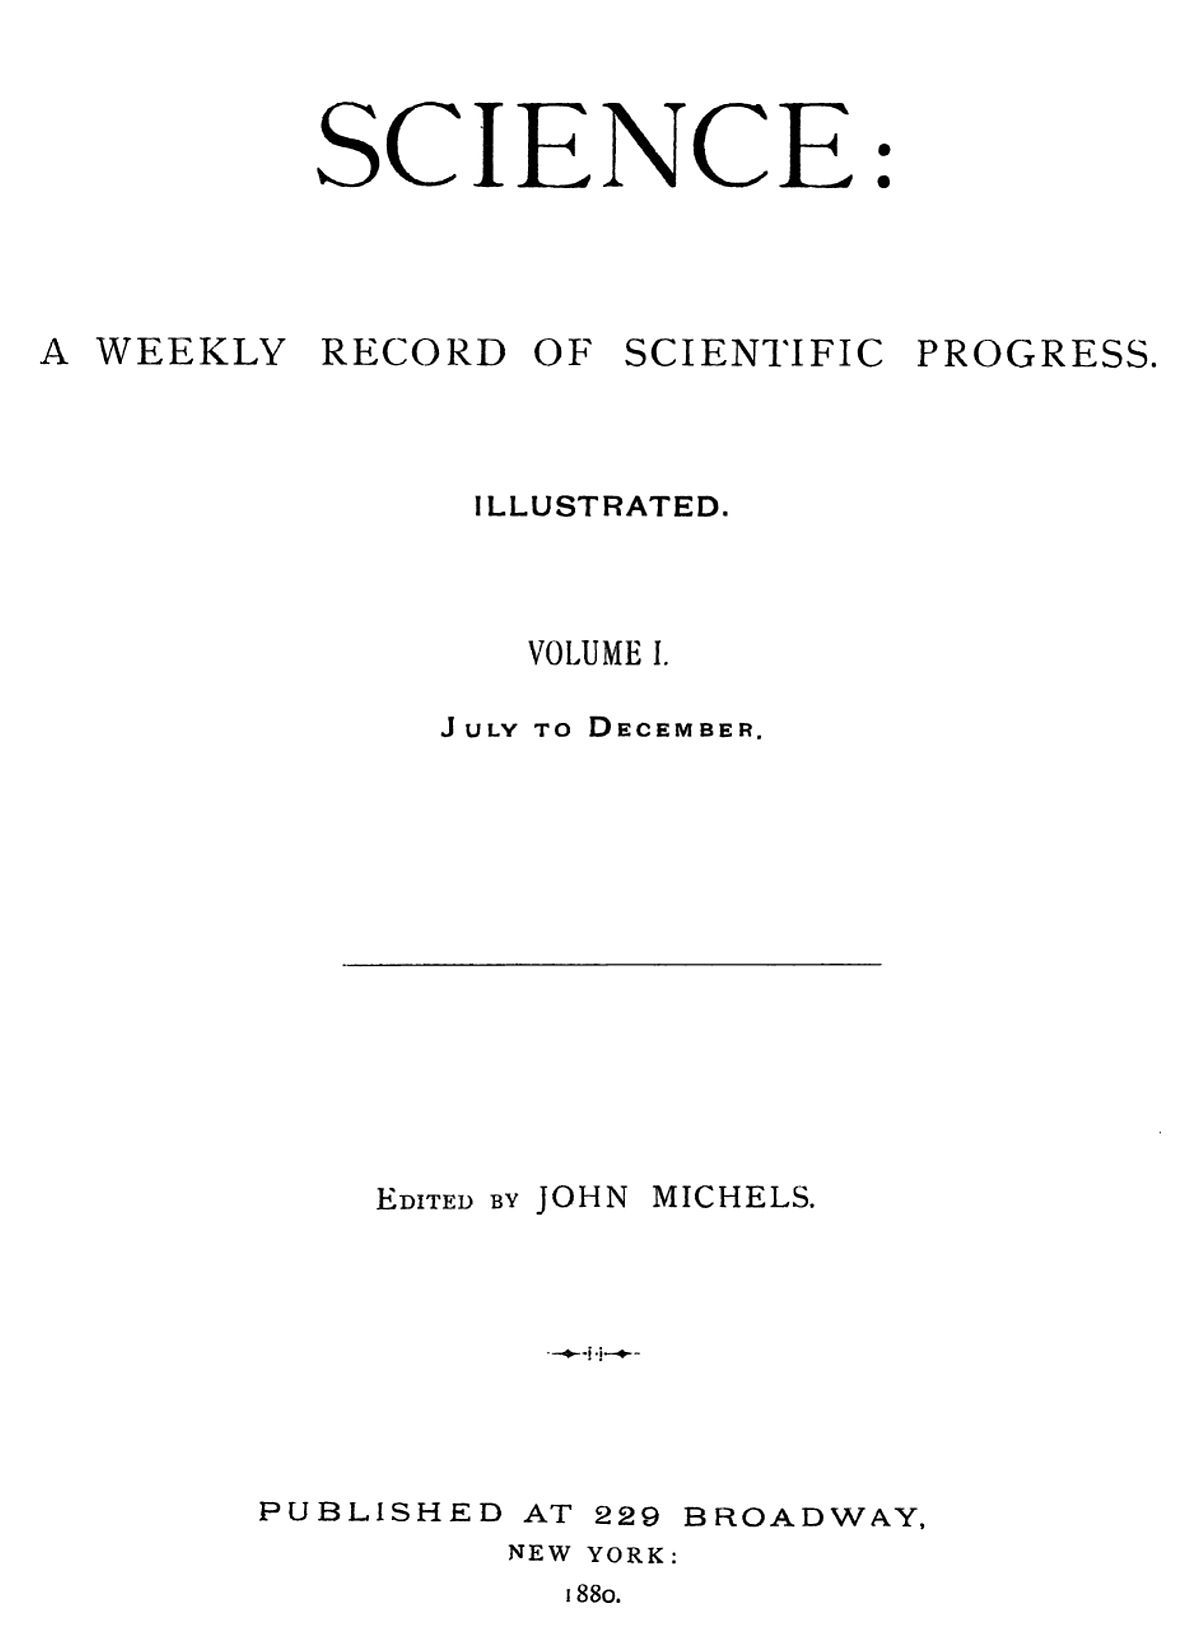 Science (journal) - Wikipedia